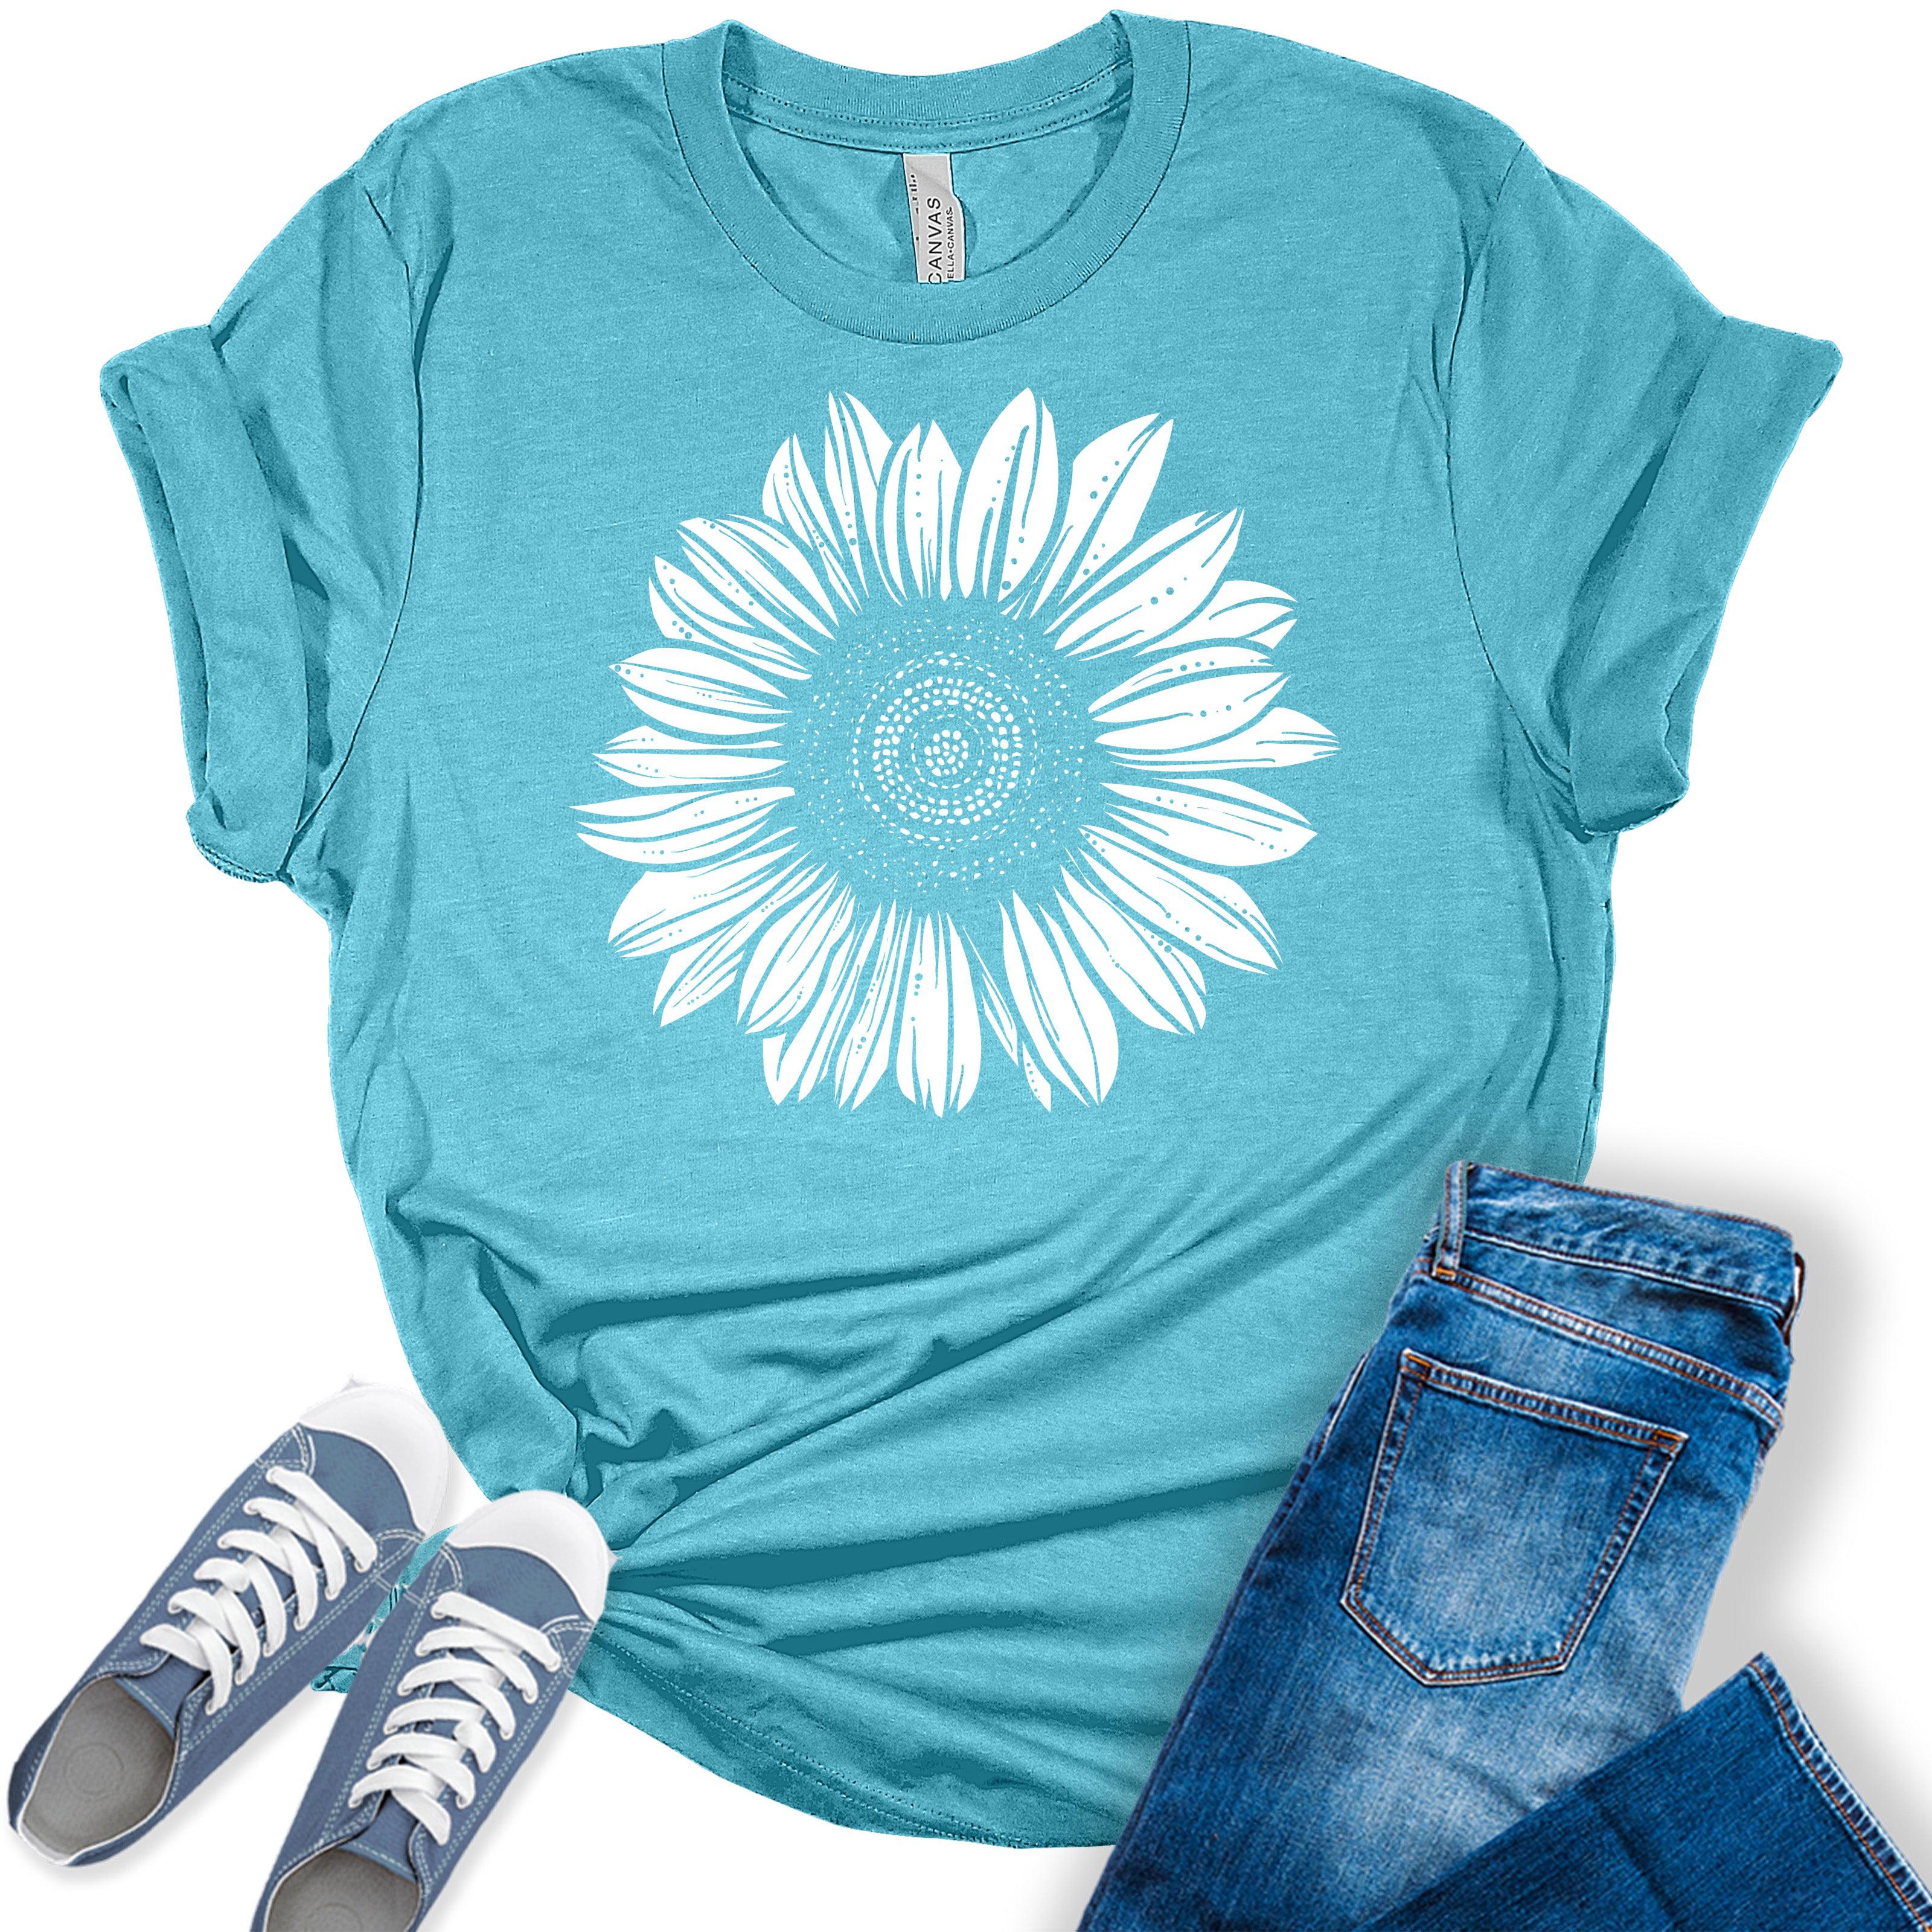 Plus – T Size Casual Sunflower Shirt Tee Graphic Women\'s Top Summer GyftWear